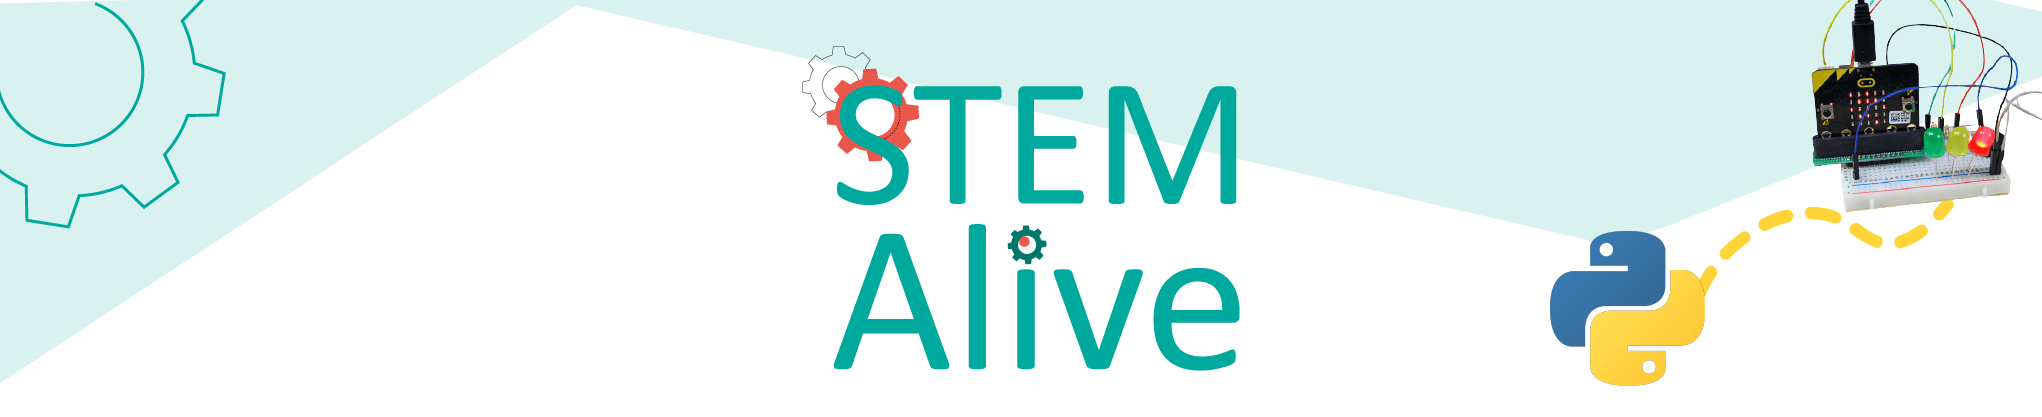 stem-alive-cover-gymnasio